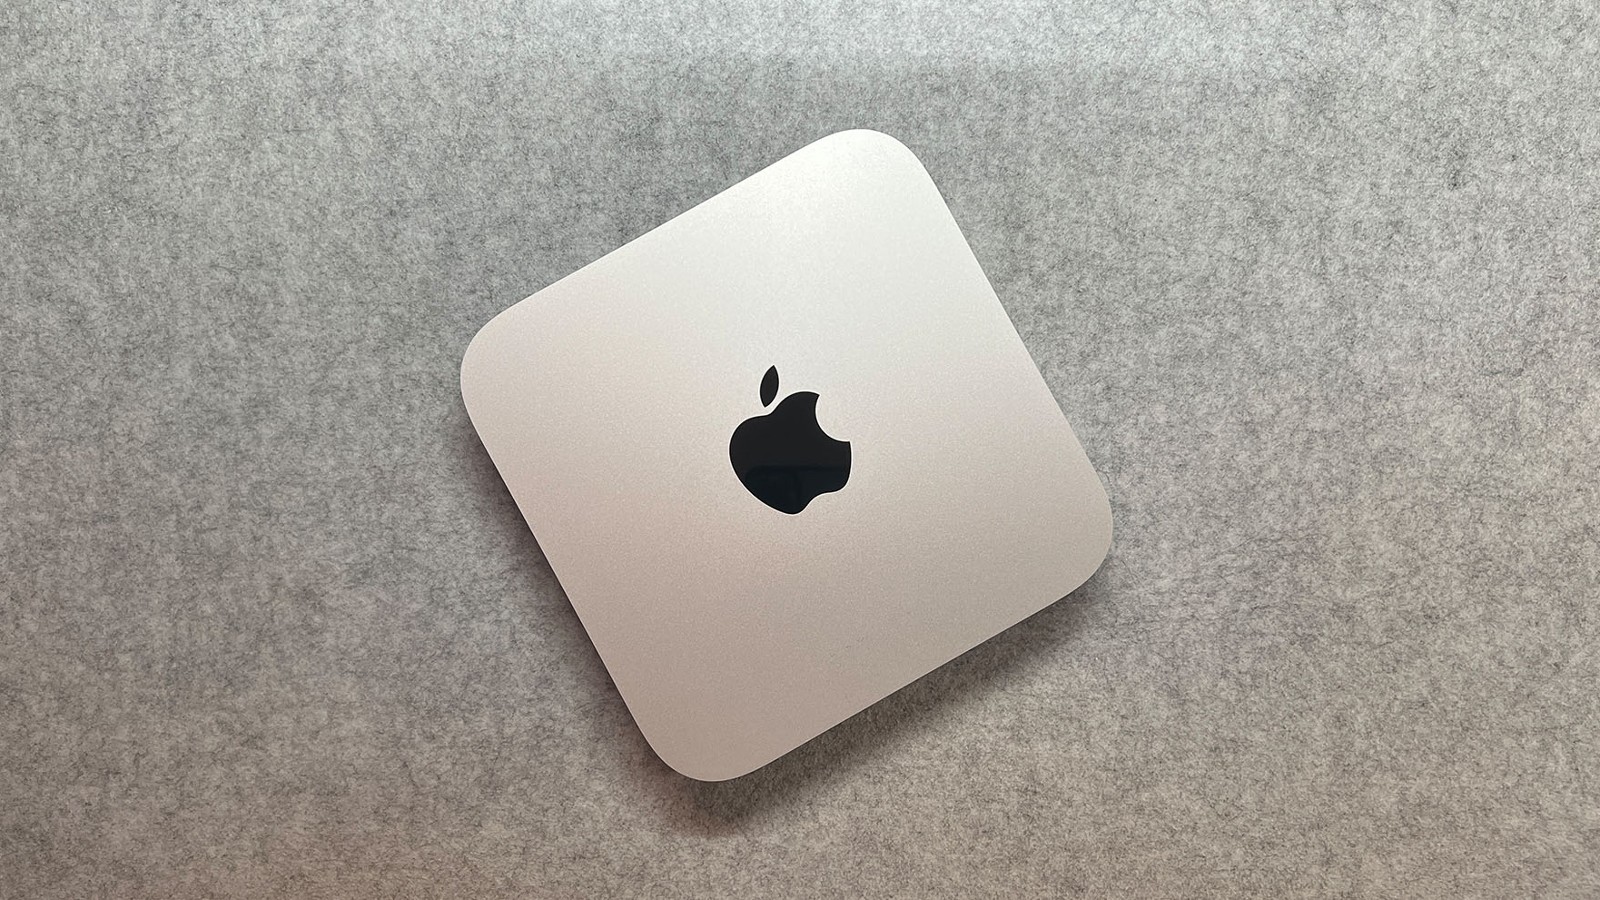 Apple Mac Mini M2 Pro (2023) review